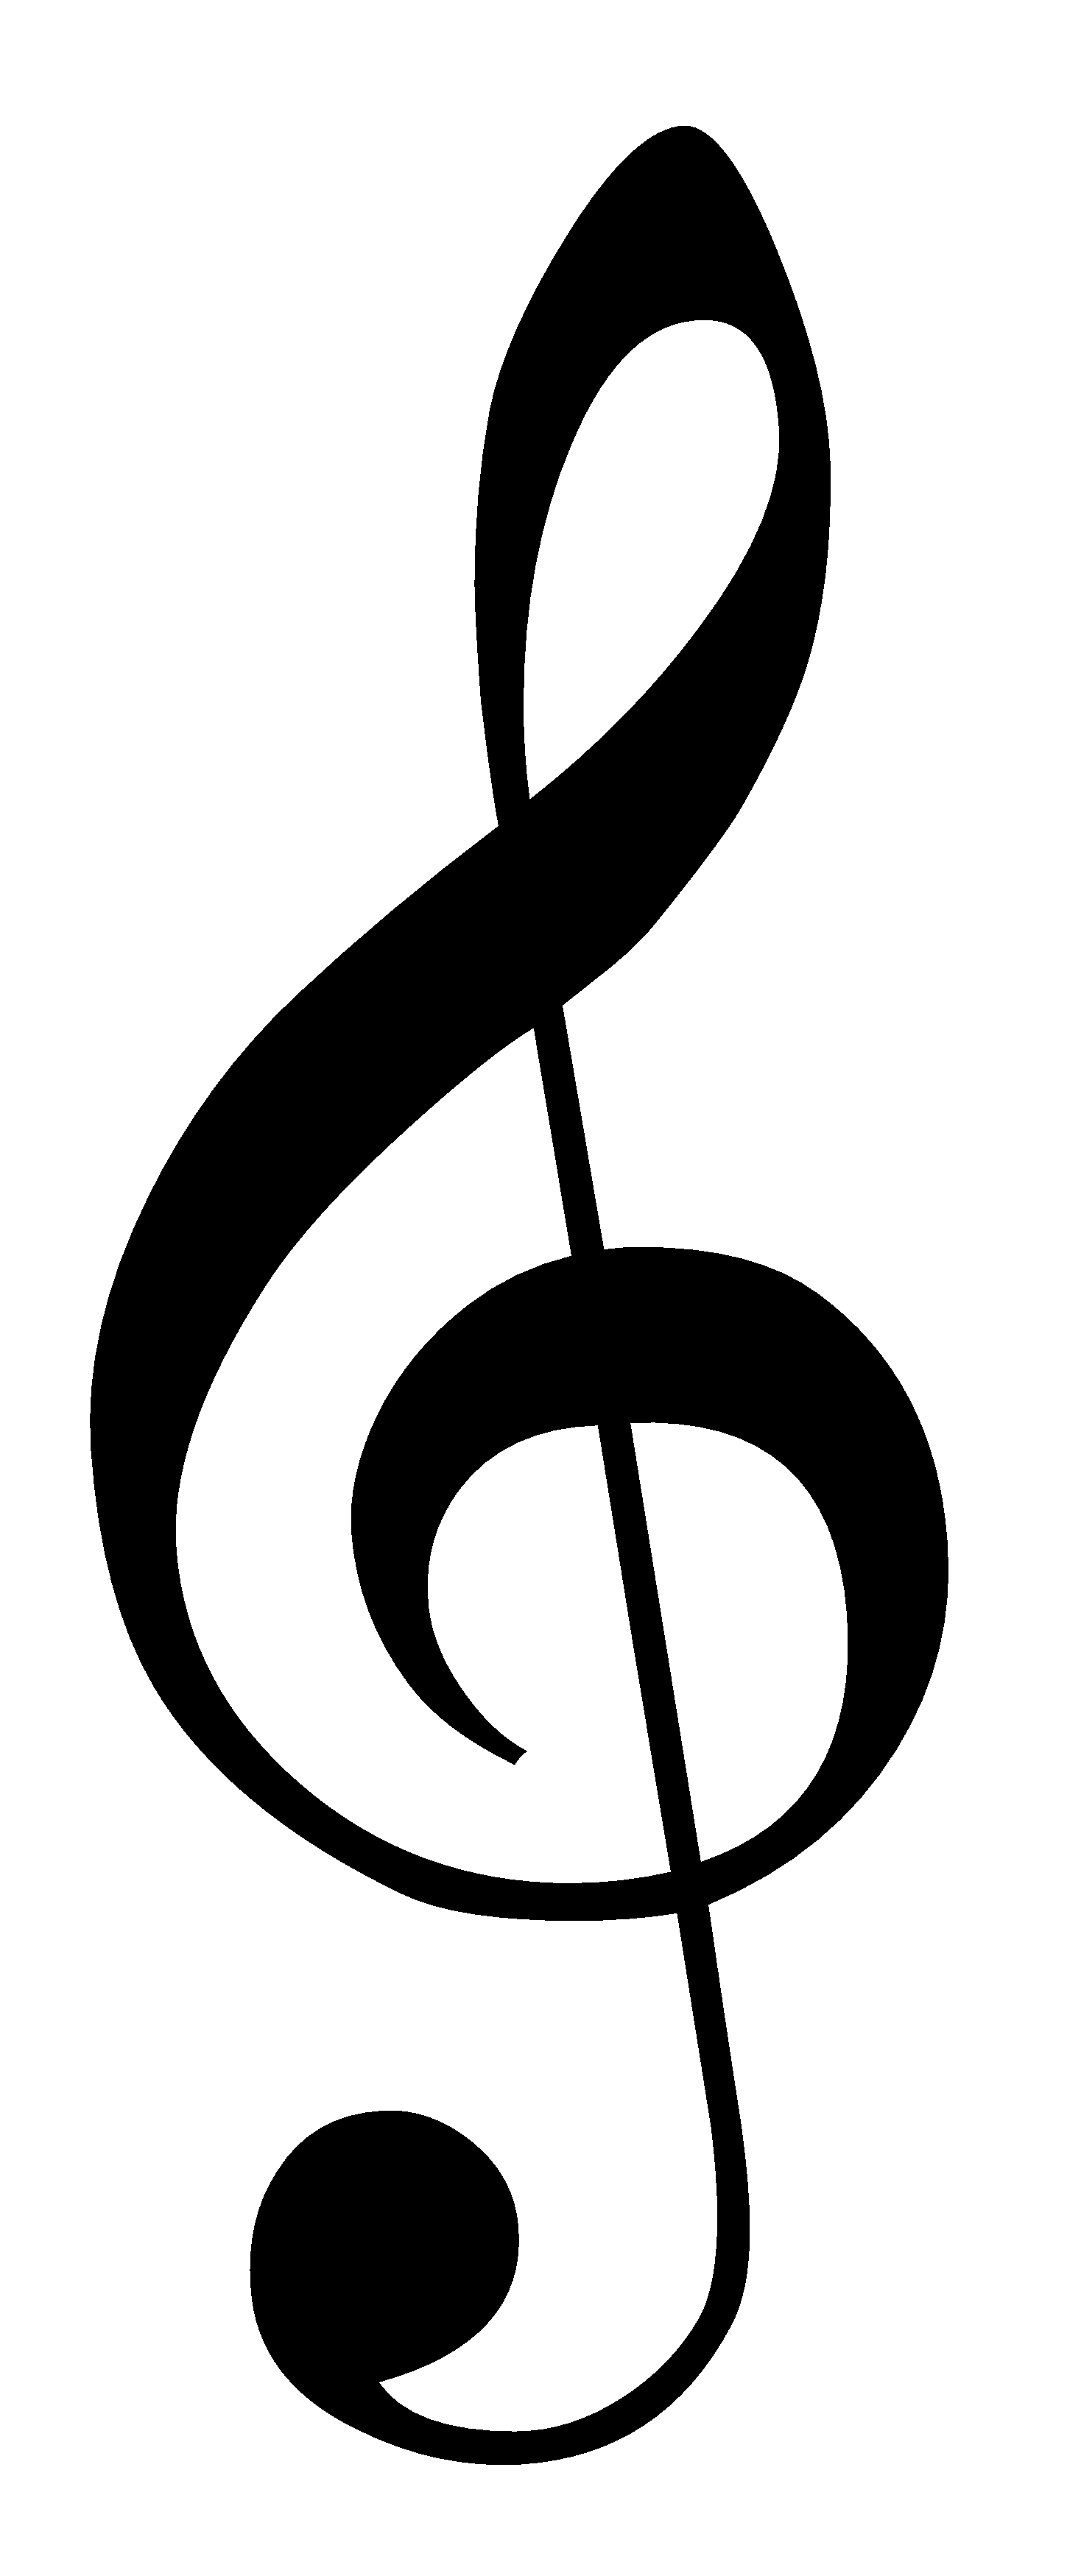 6 chan i denor a thelyn / 6 Songs for Tenor & Harp - Wynne, David